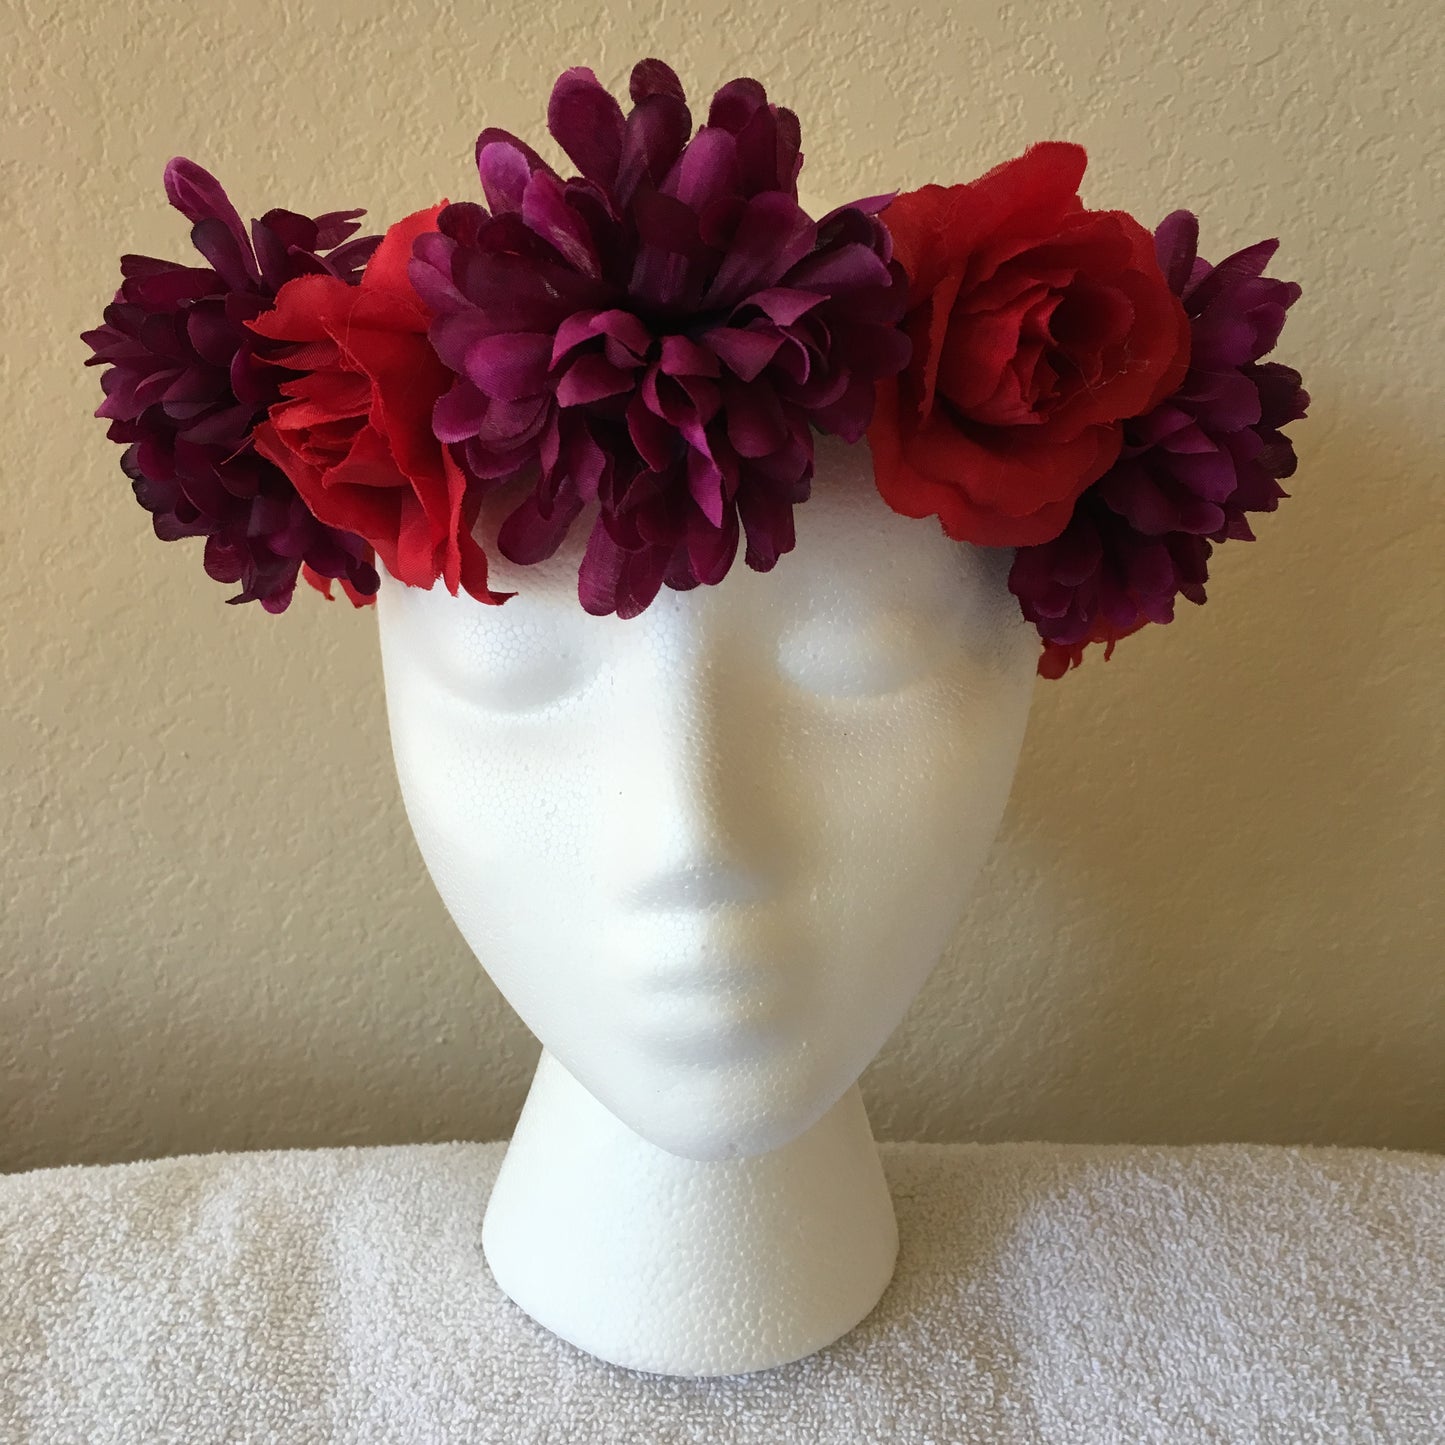 Medium Wreath – Burgundy flowers w/ red roses